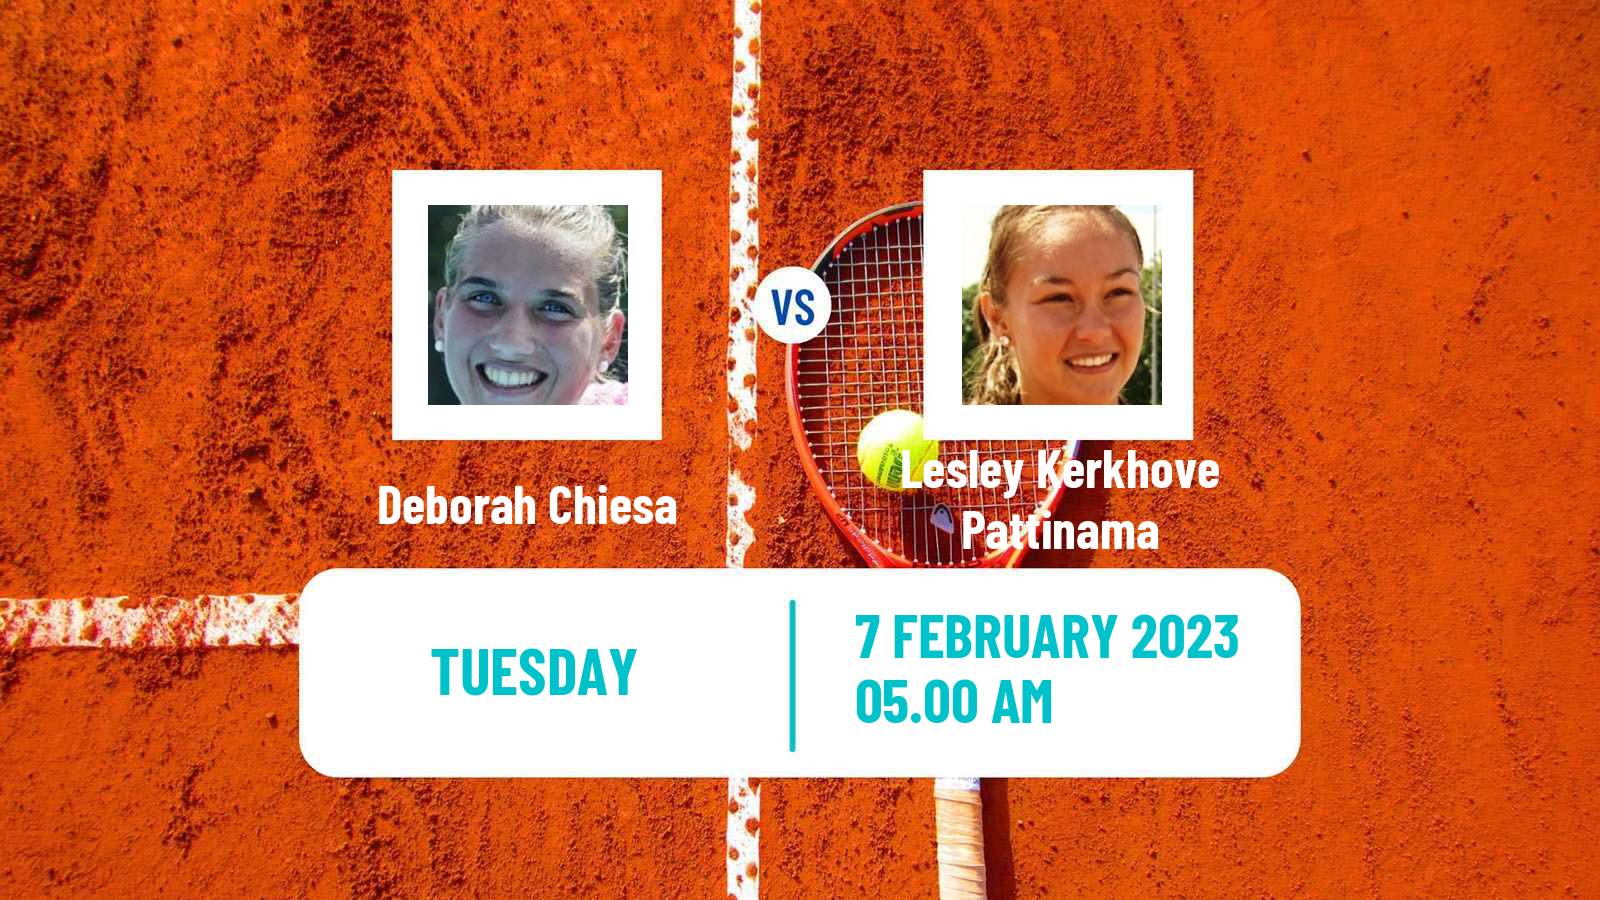 Tennis ITF Tournaments Deborah Chiesa - Lesley Kerkhove Pattinama